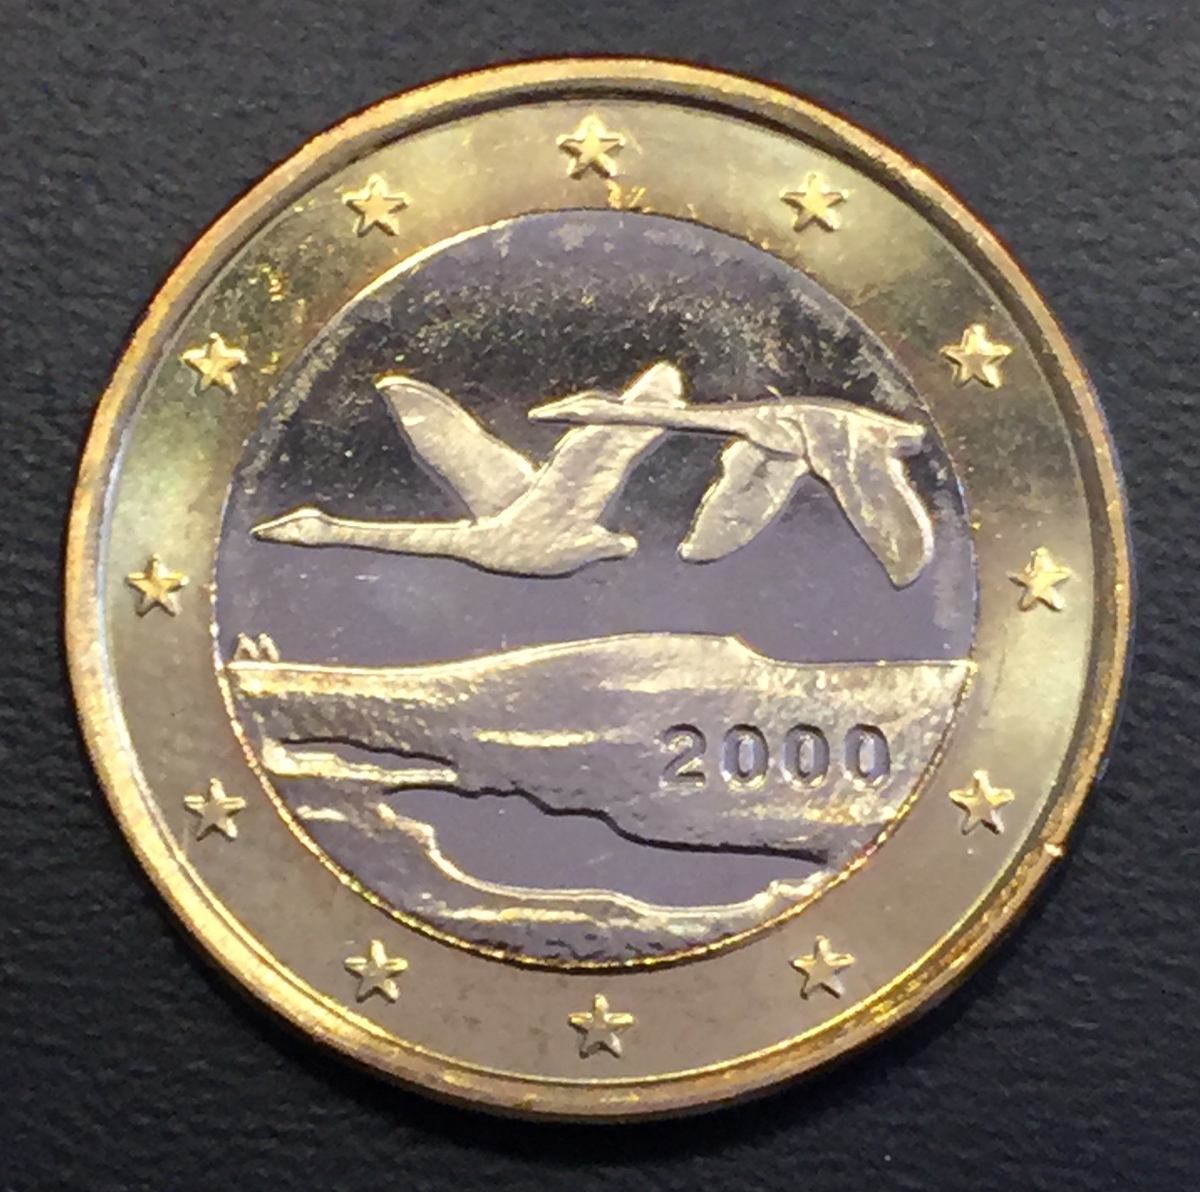 Fin032 Moneda Finlandia 1  Euro  2000 Unc bu Ayff 193 00 